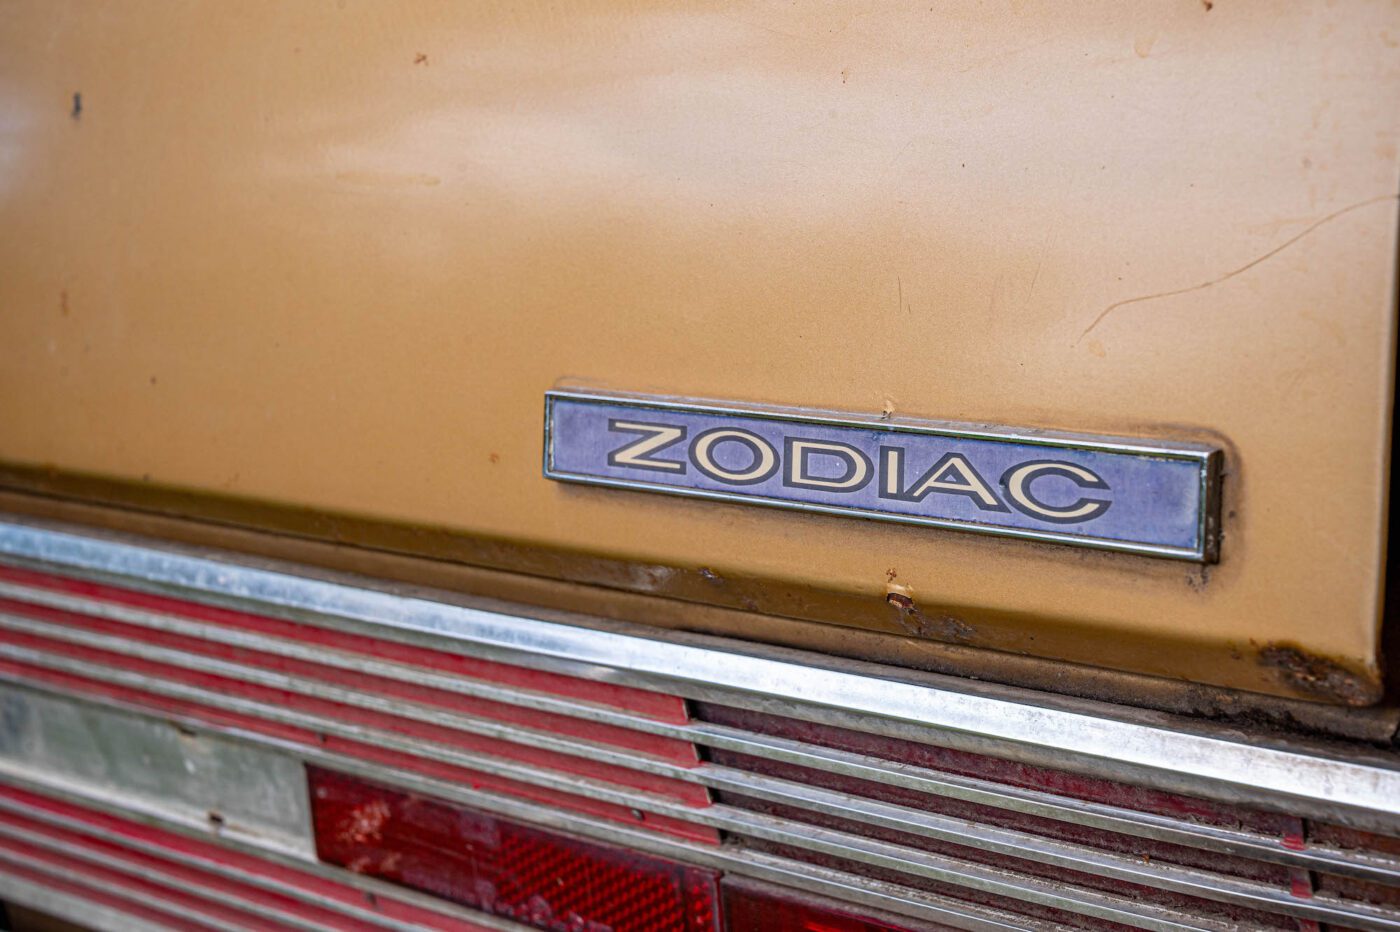 Zodiac boot badge